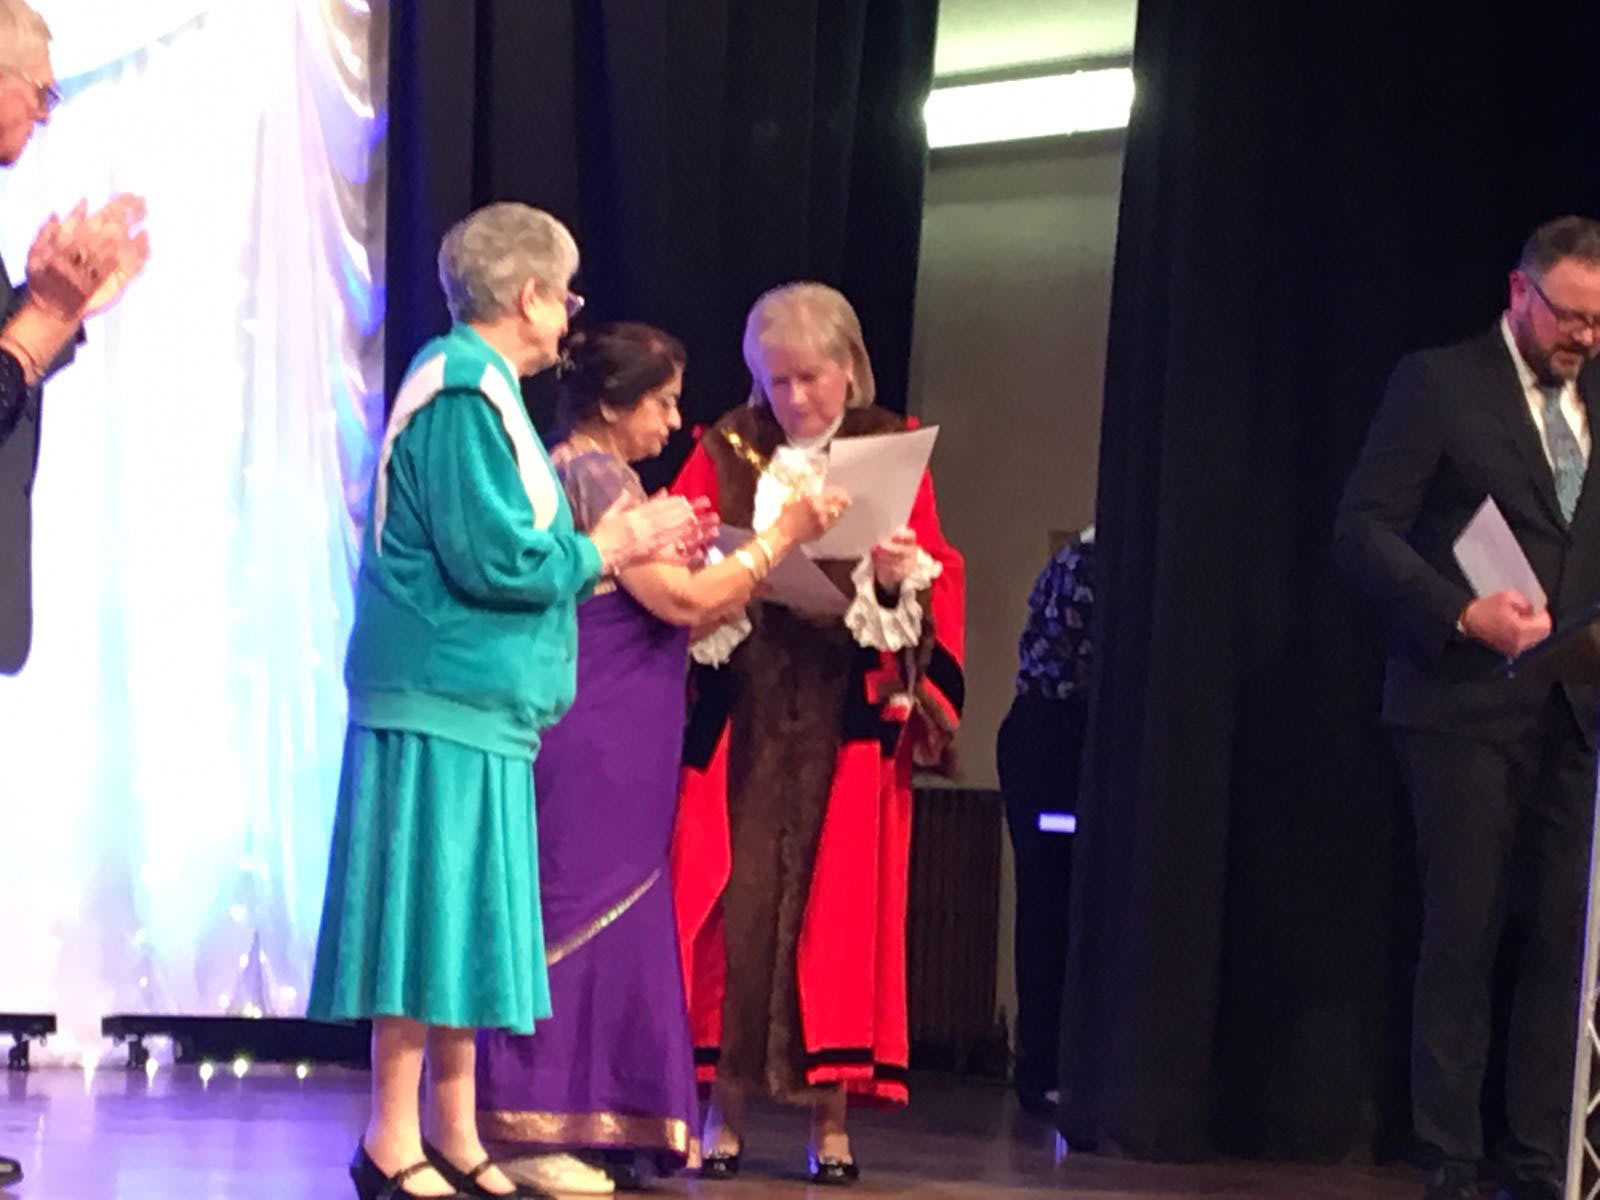 Mayor community Award on 22 March 2018 in Town Hall Redbridge 